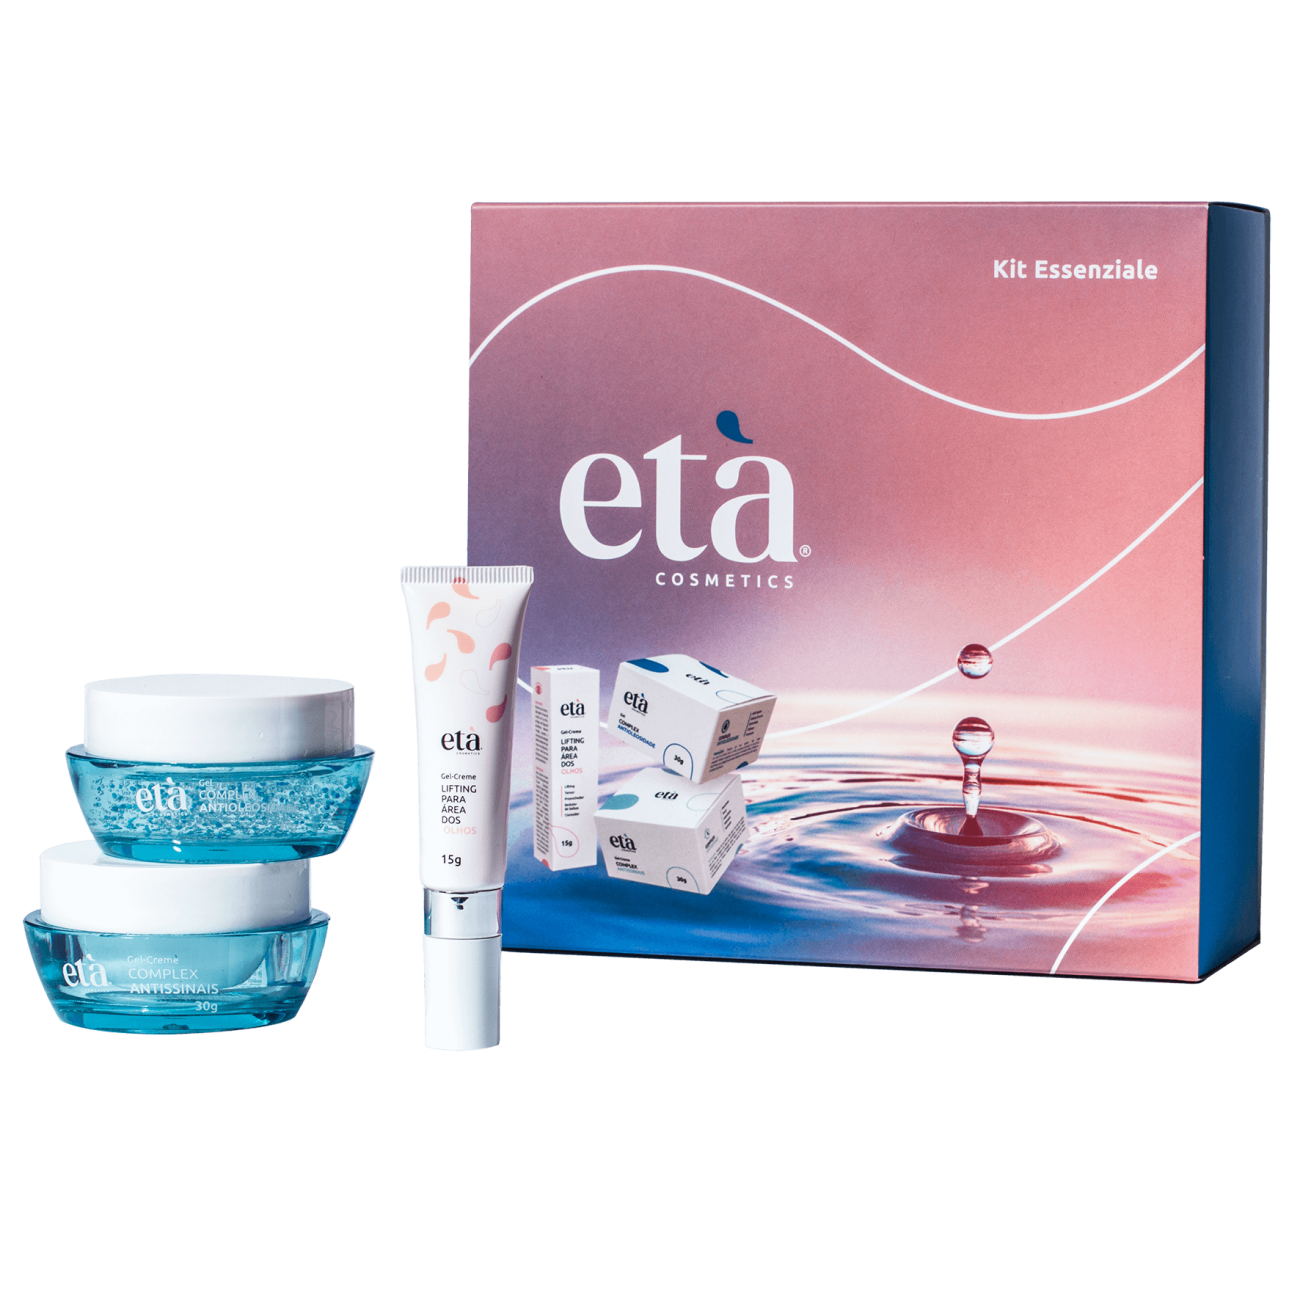 Kit Essenziale da Età Cosmetics reúne 3 cosméticos exclusivos